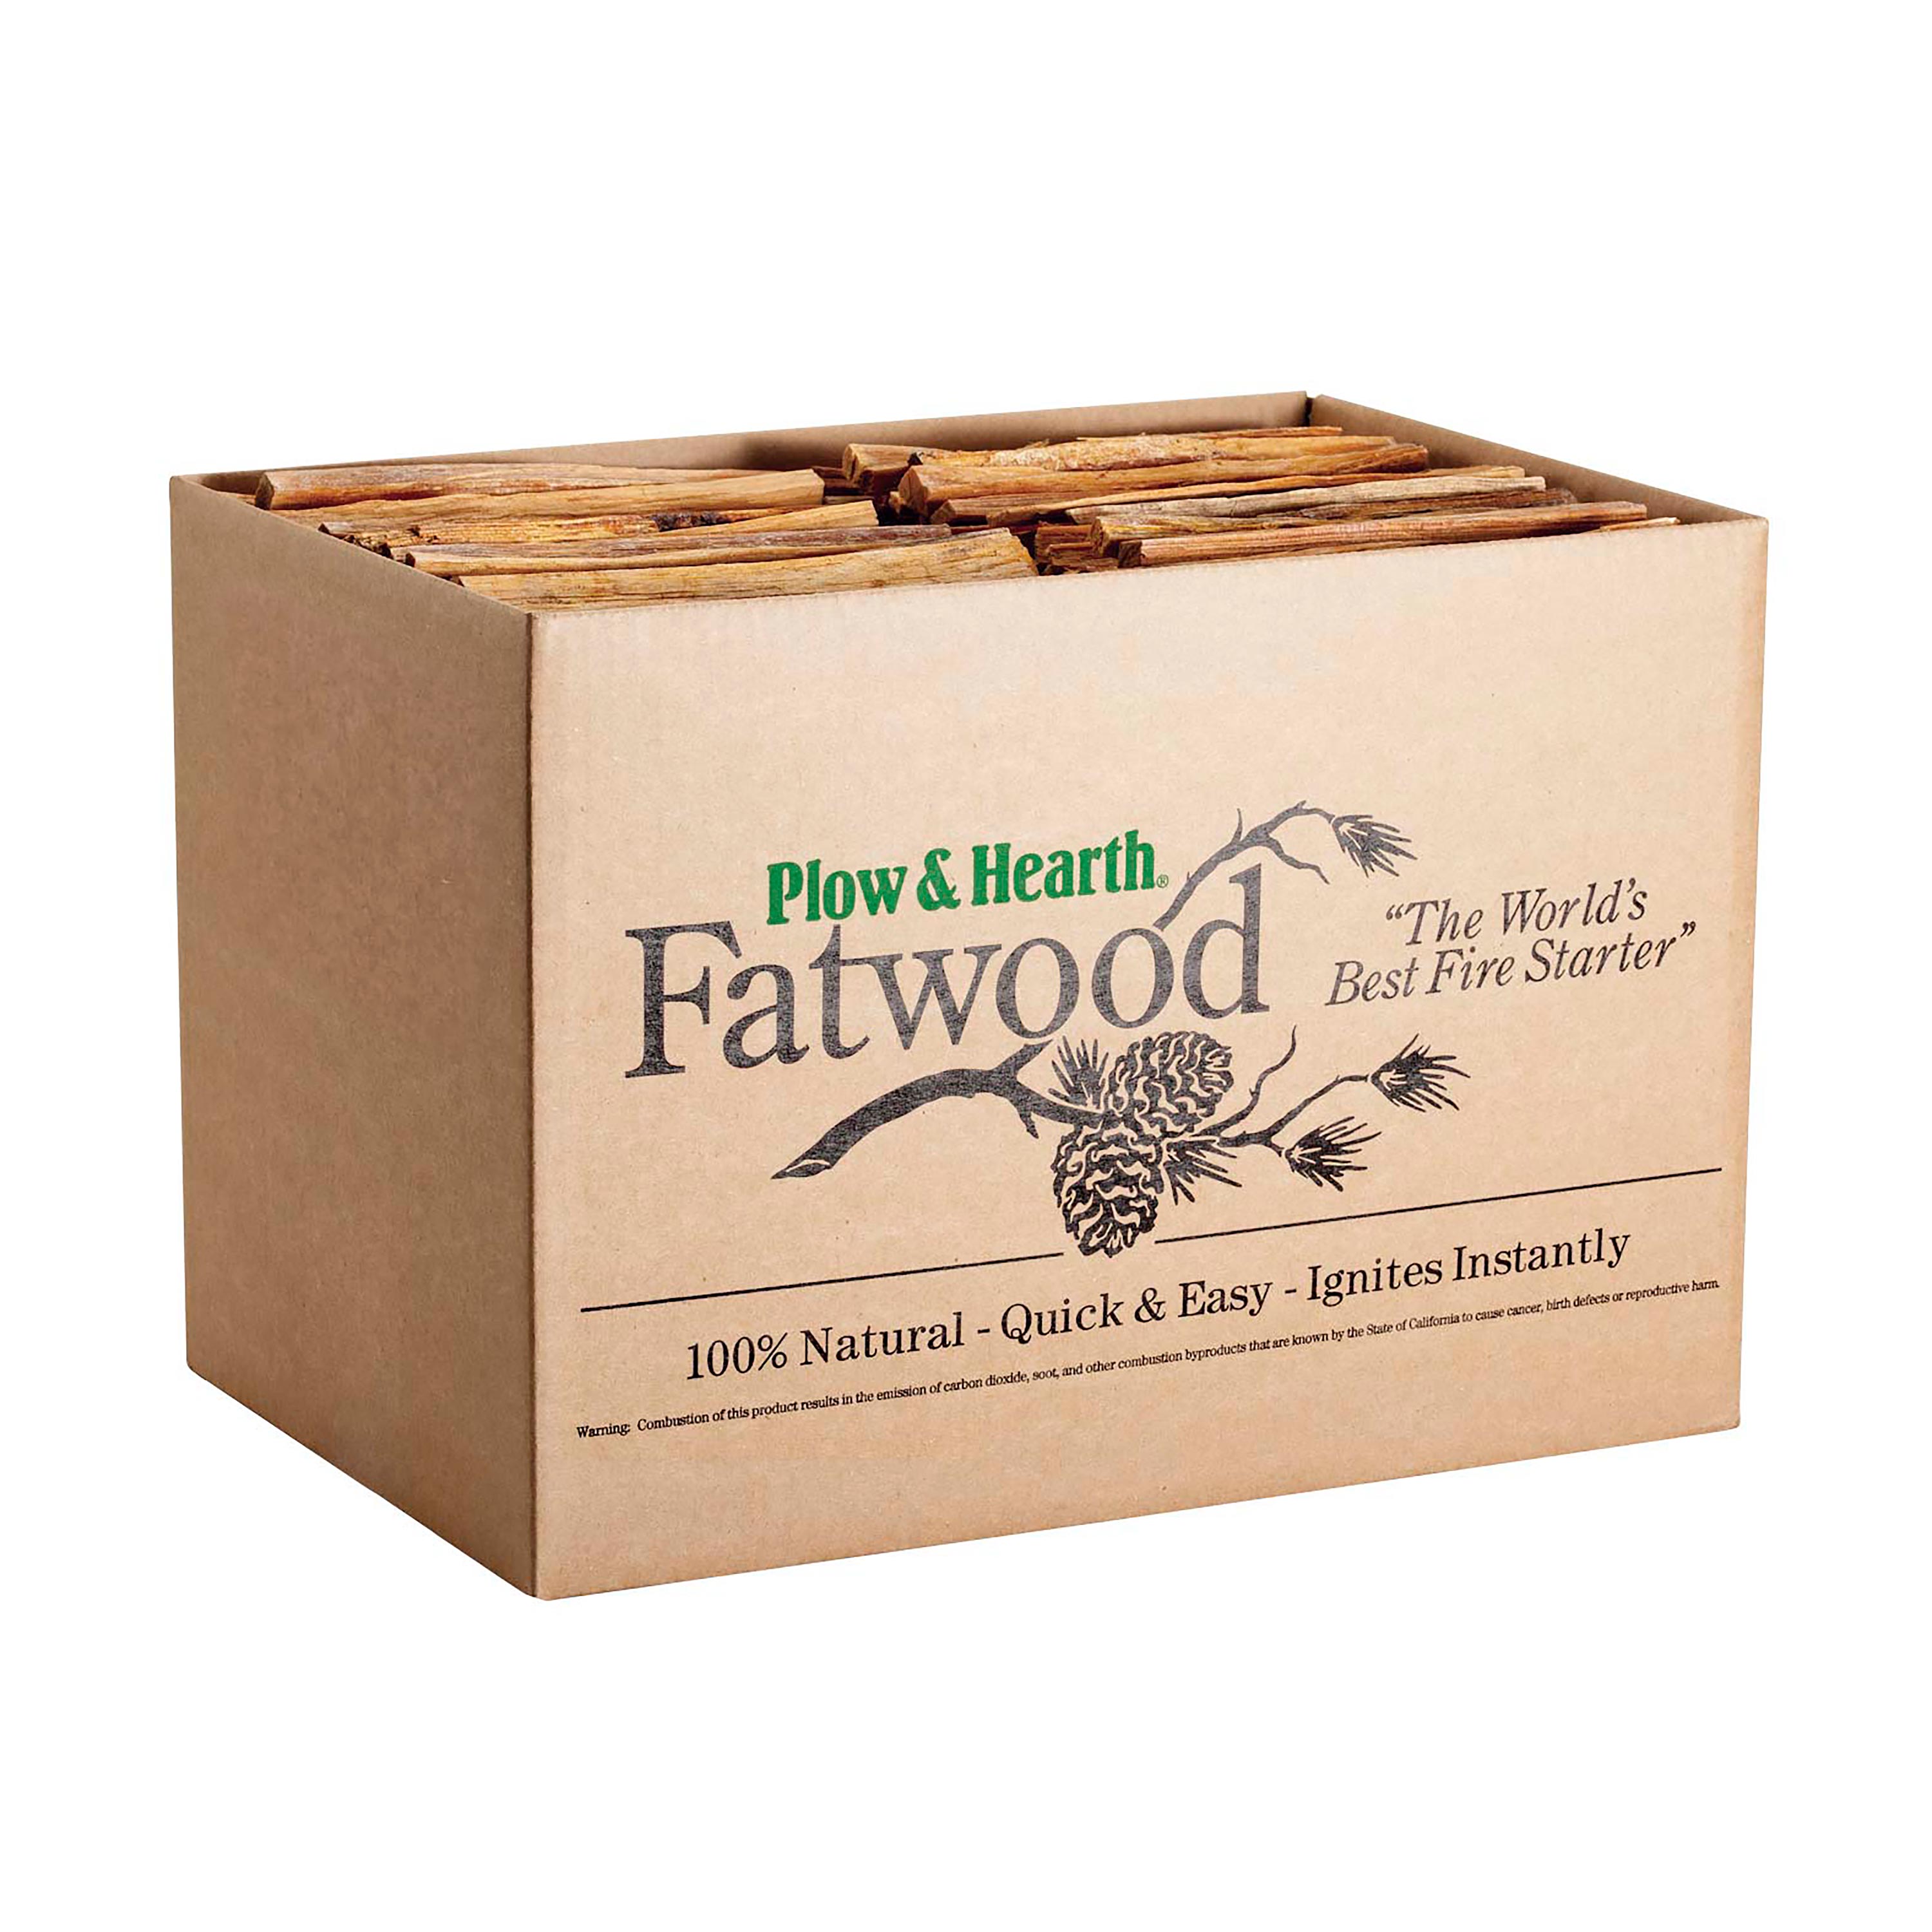 Fatwood Fire-Starter, 25 lb. Box